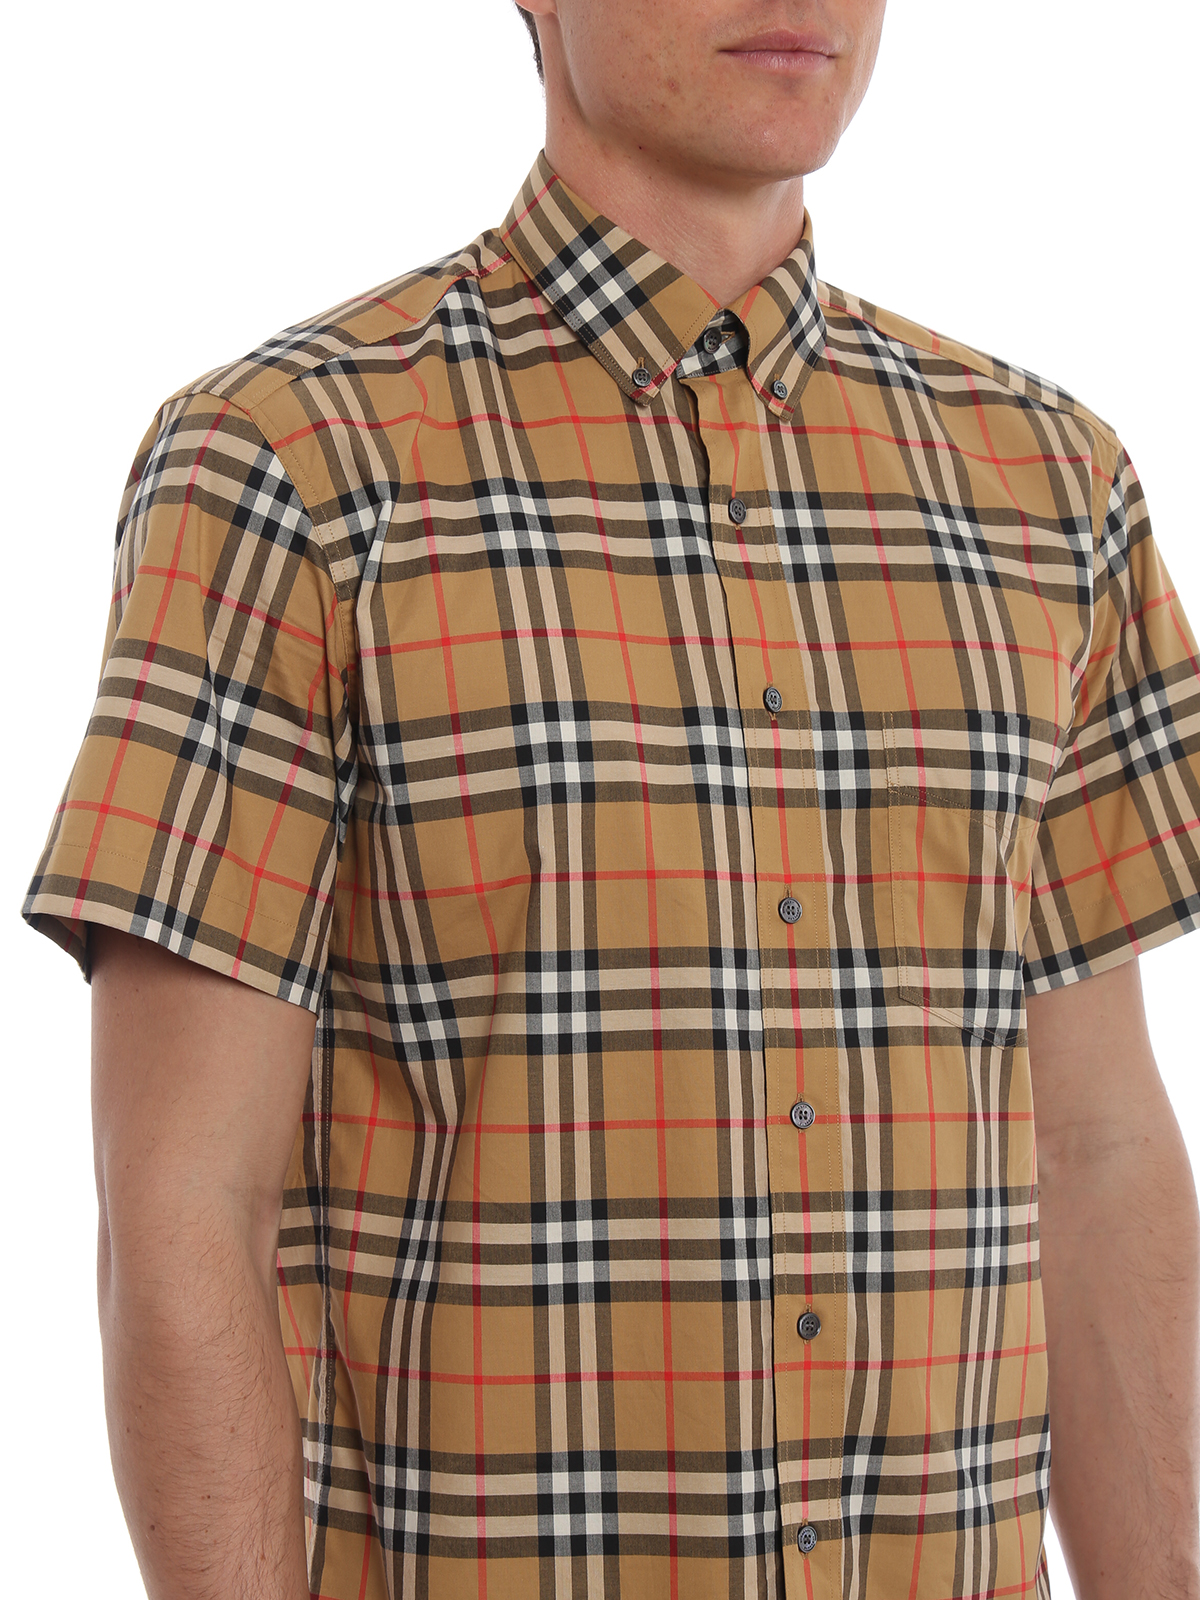 Shirts Burberry - Jameson short sleeve Vintage check shirt - 8002927